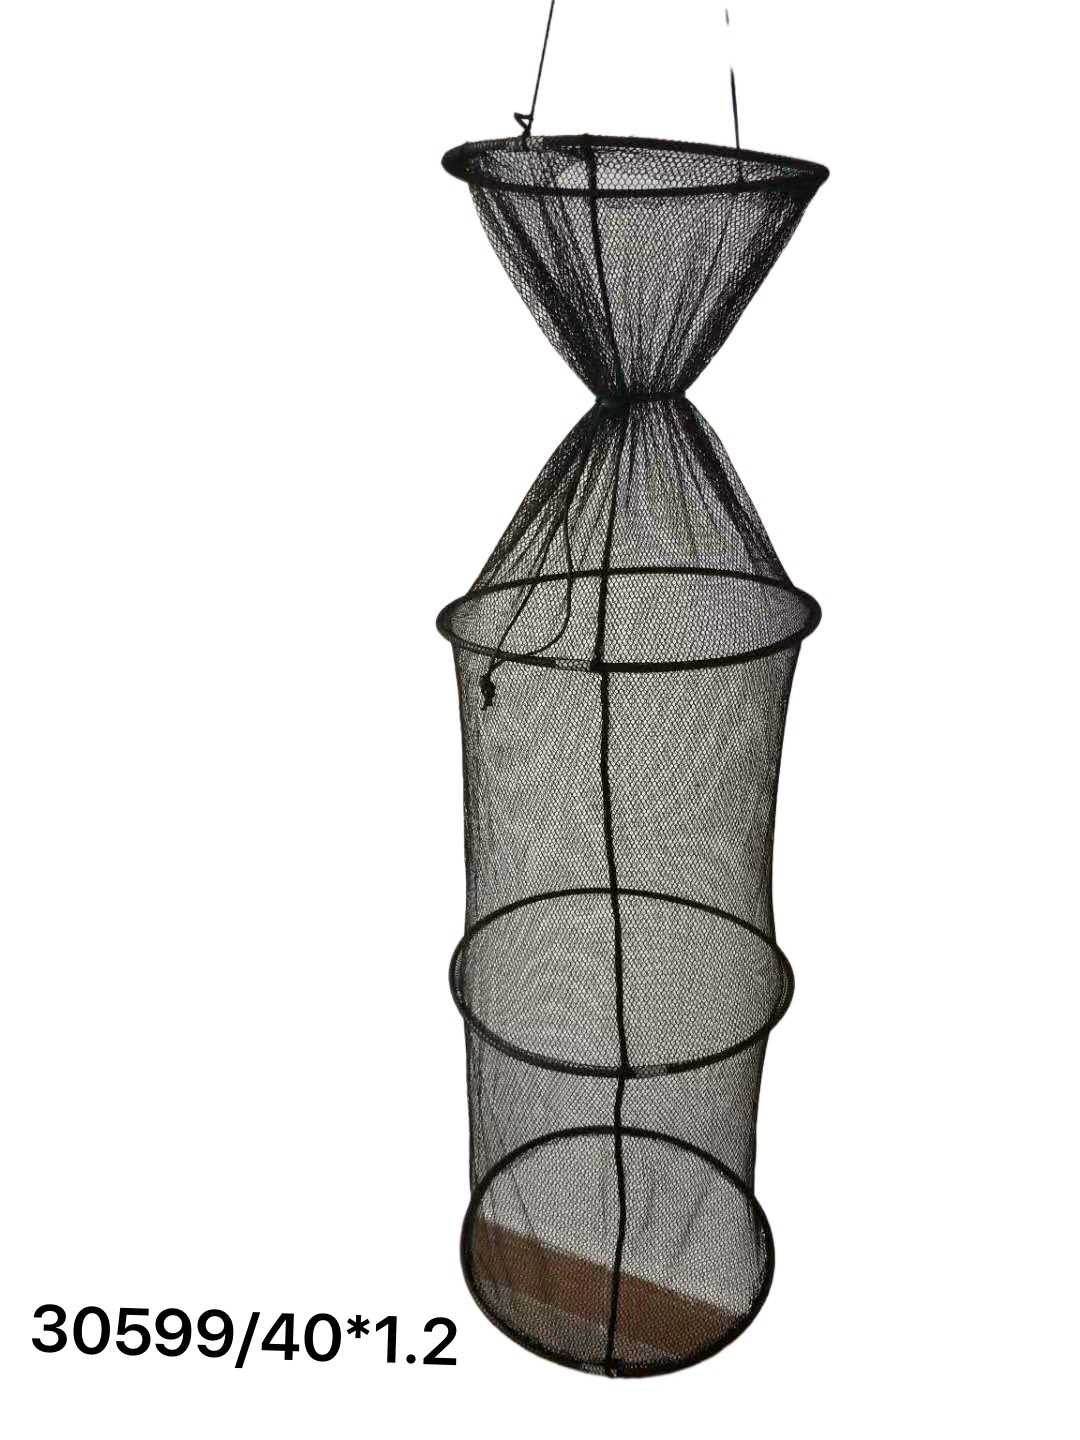 Collapsible fish basket - Net - 40x80cm - 30598